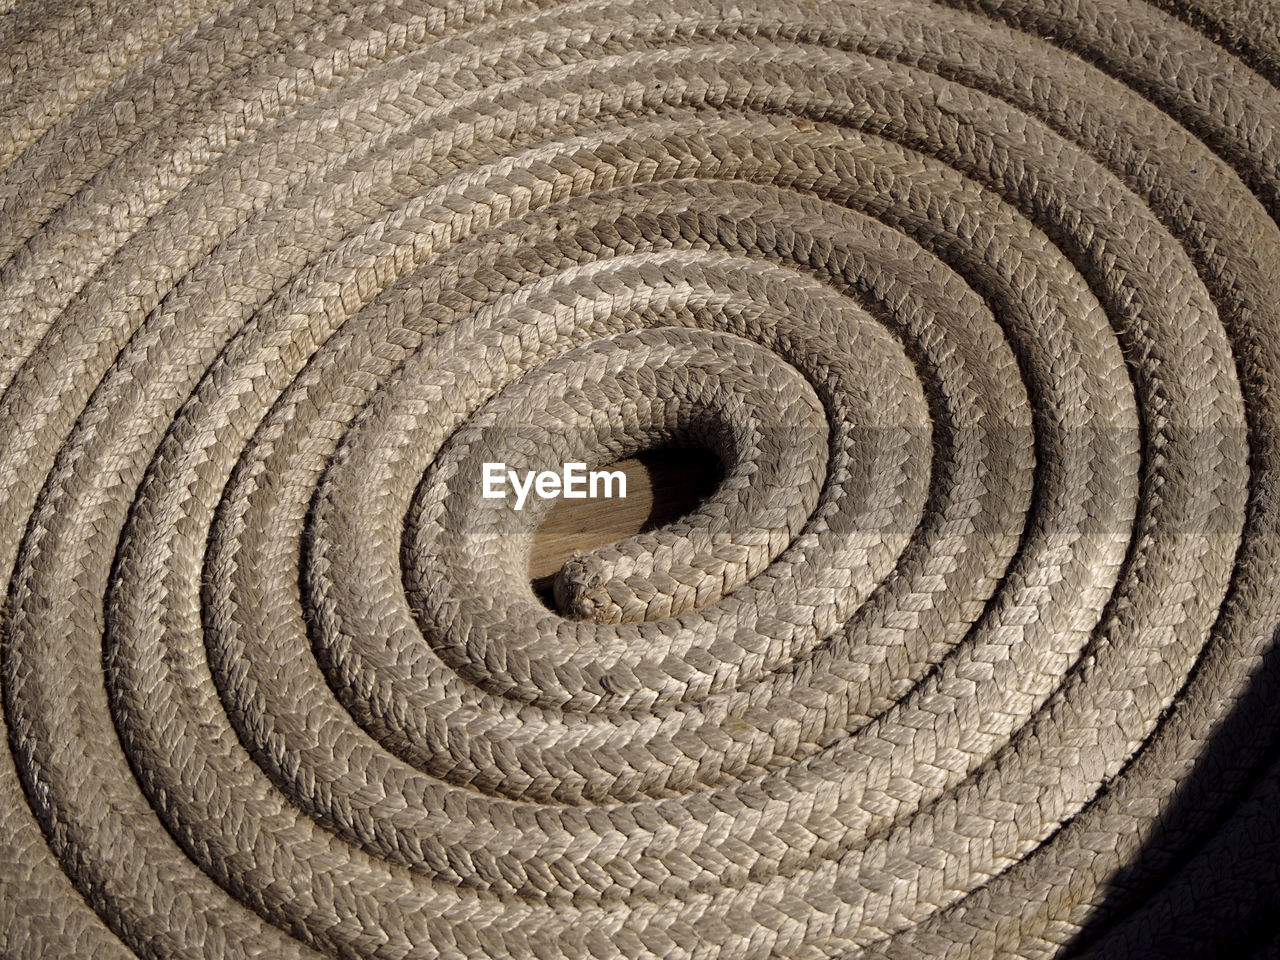 Full frame shot of spiral shaped arranged rope